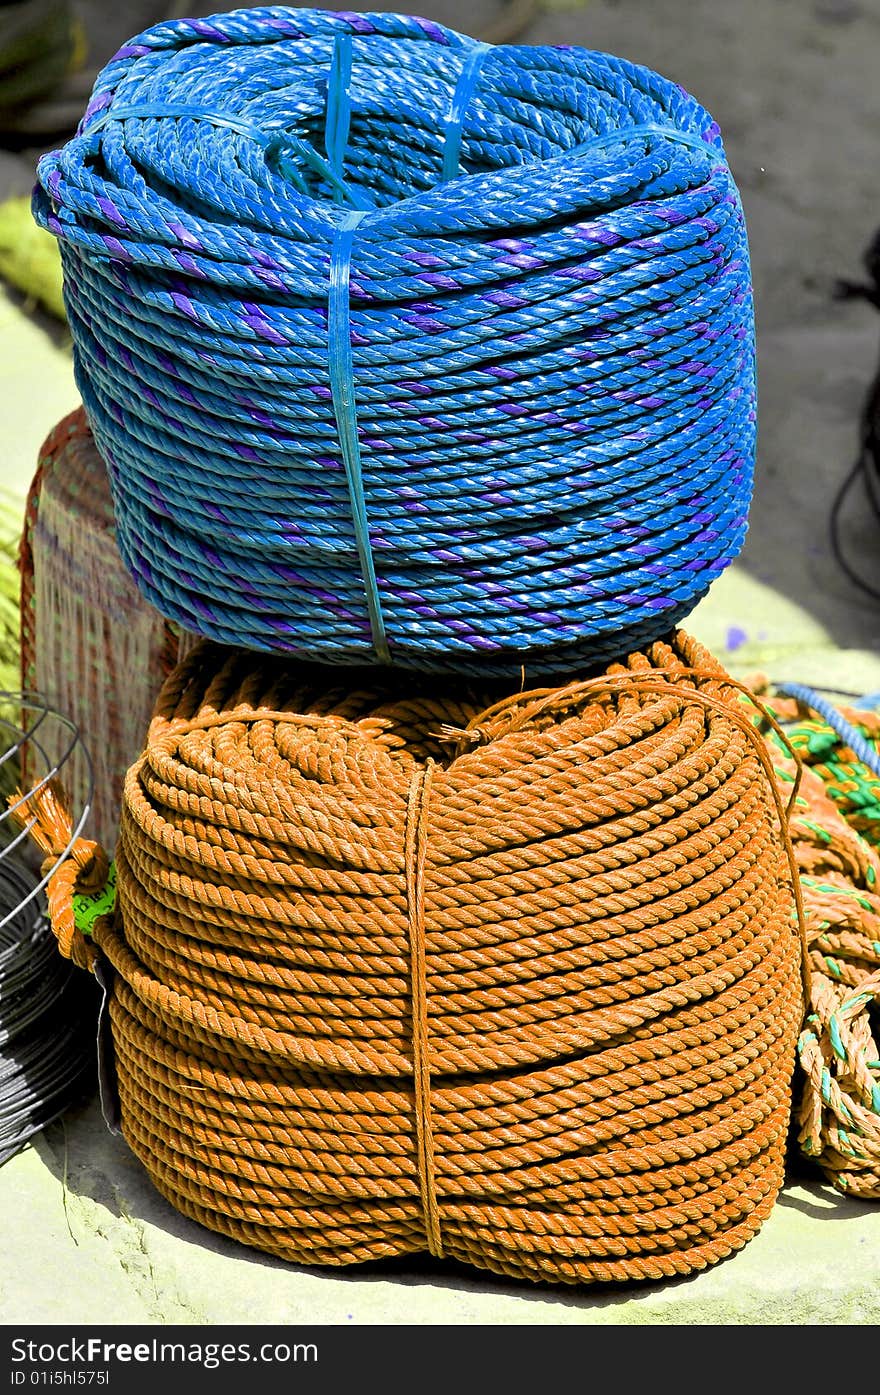 Closeup of coloured rope bundles